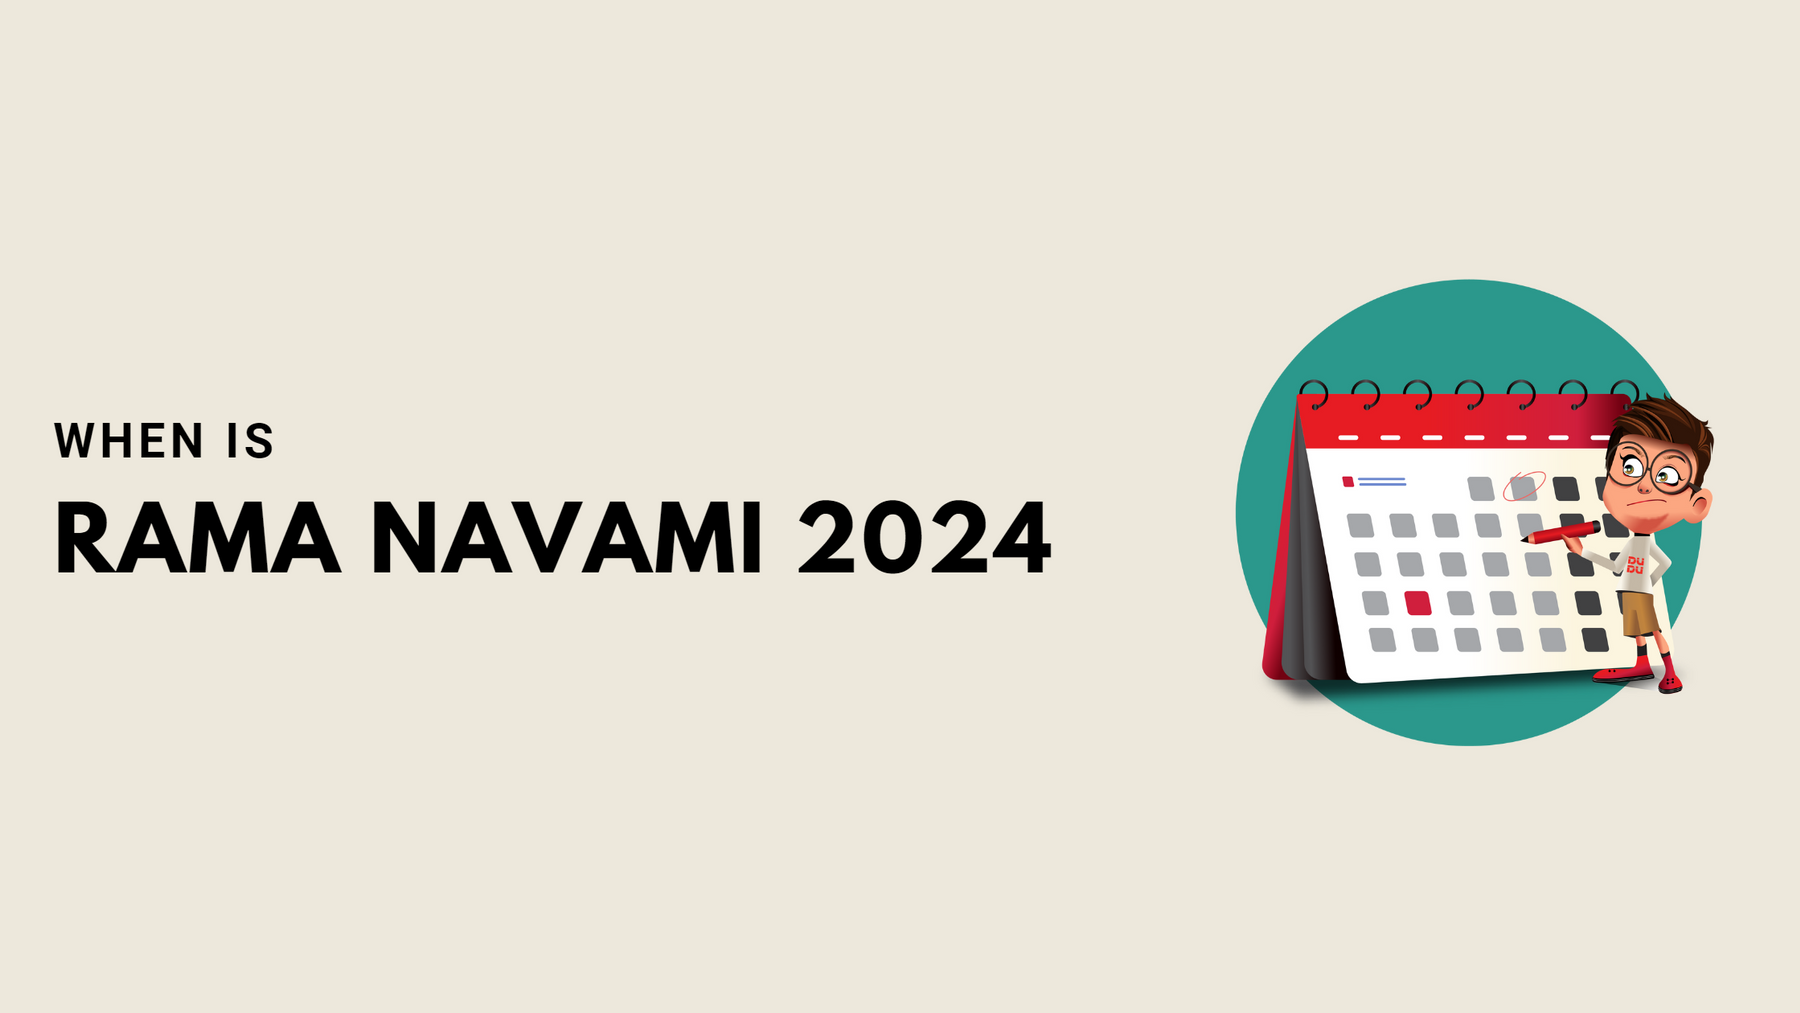 When Is Rama Navami 2024?